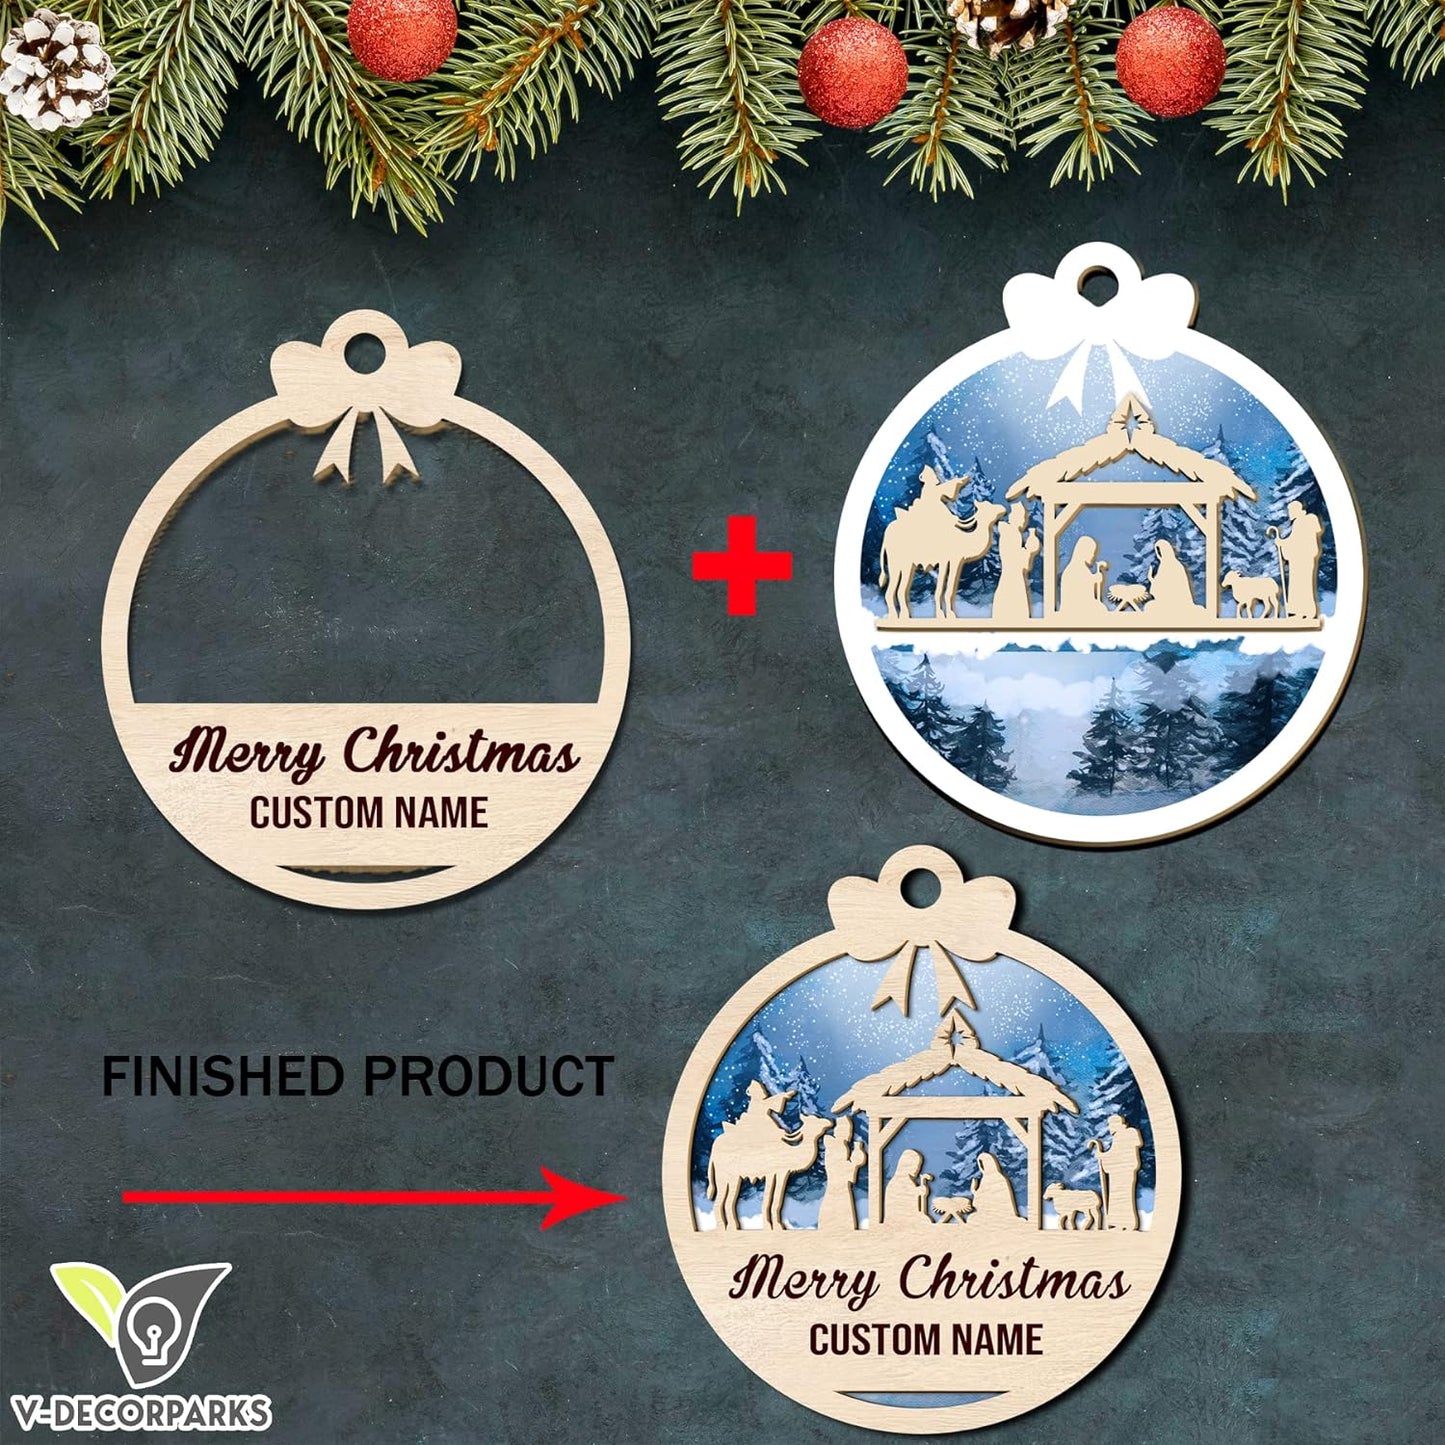 Personalized Nativity Christmas Wood Layered Ornaments - Personalized Ornaments for Christmas Tree Decorations